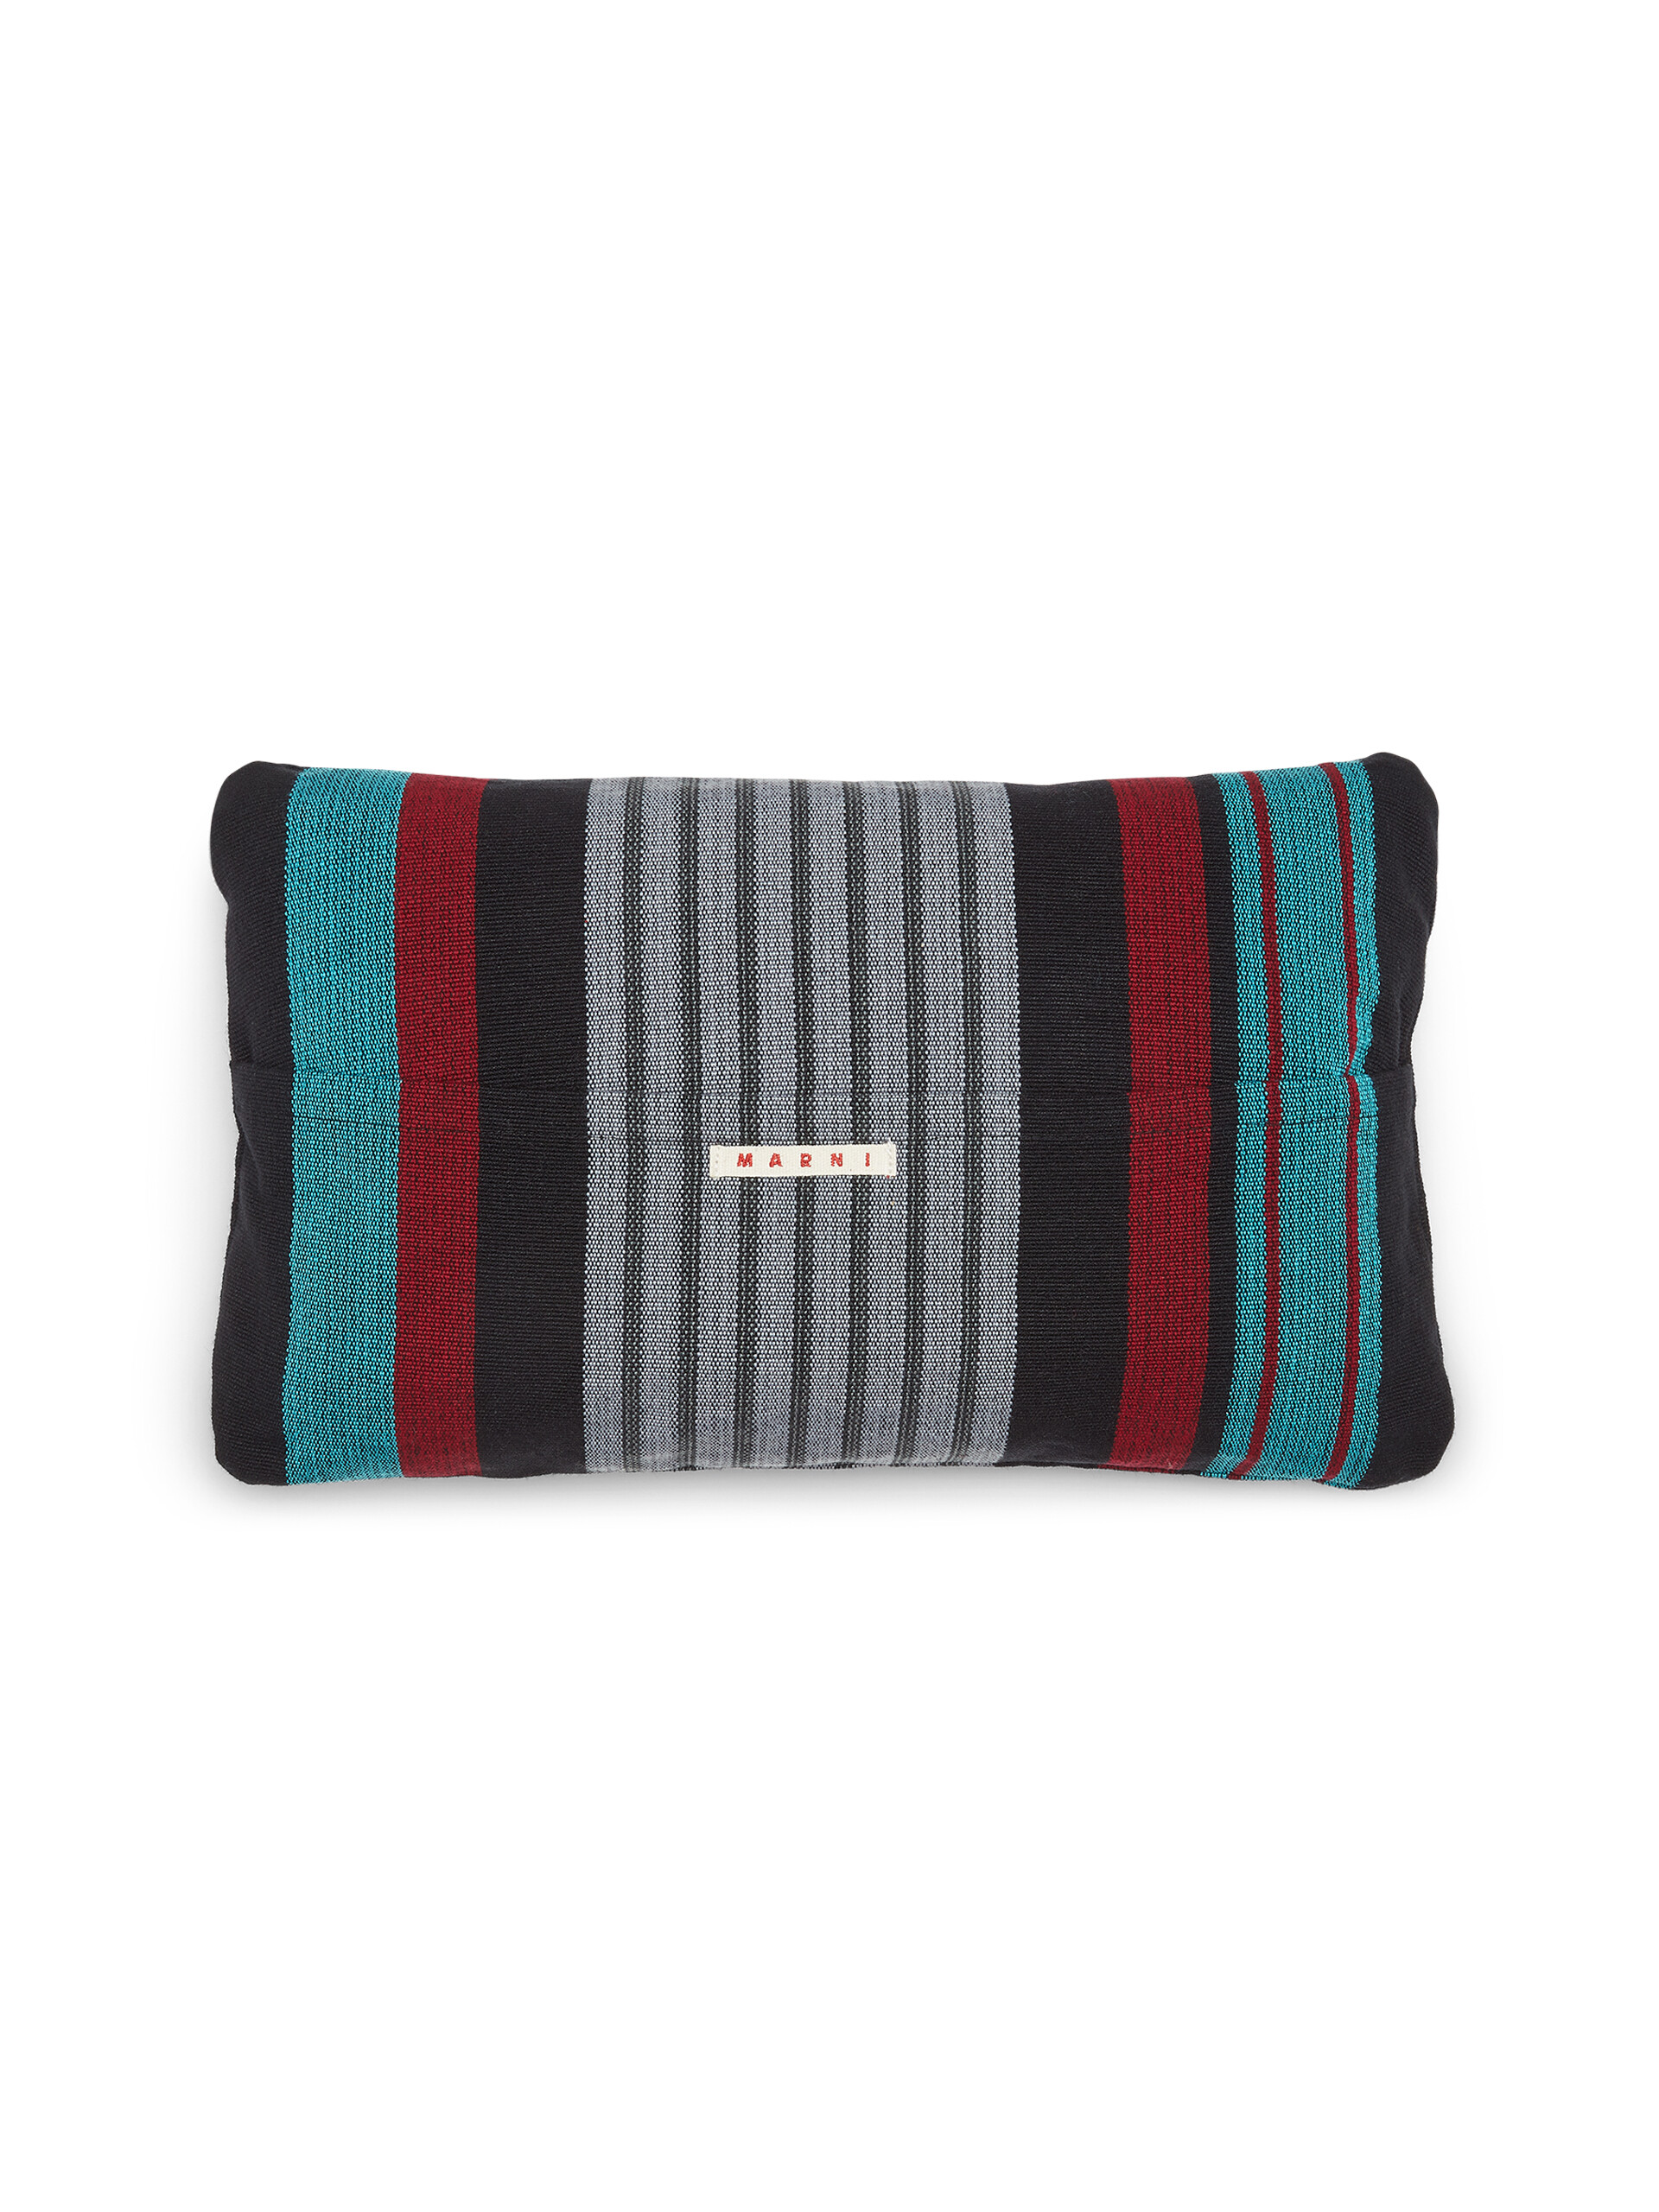 MARNI MARKET cushion in multicolor black fabric - Furniture - Image 2